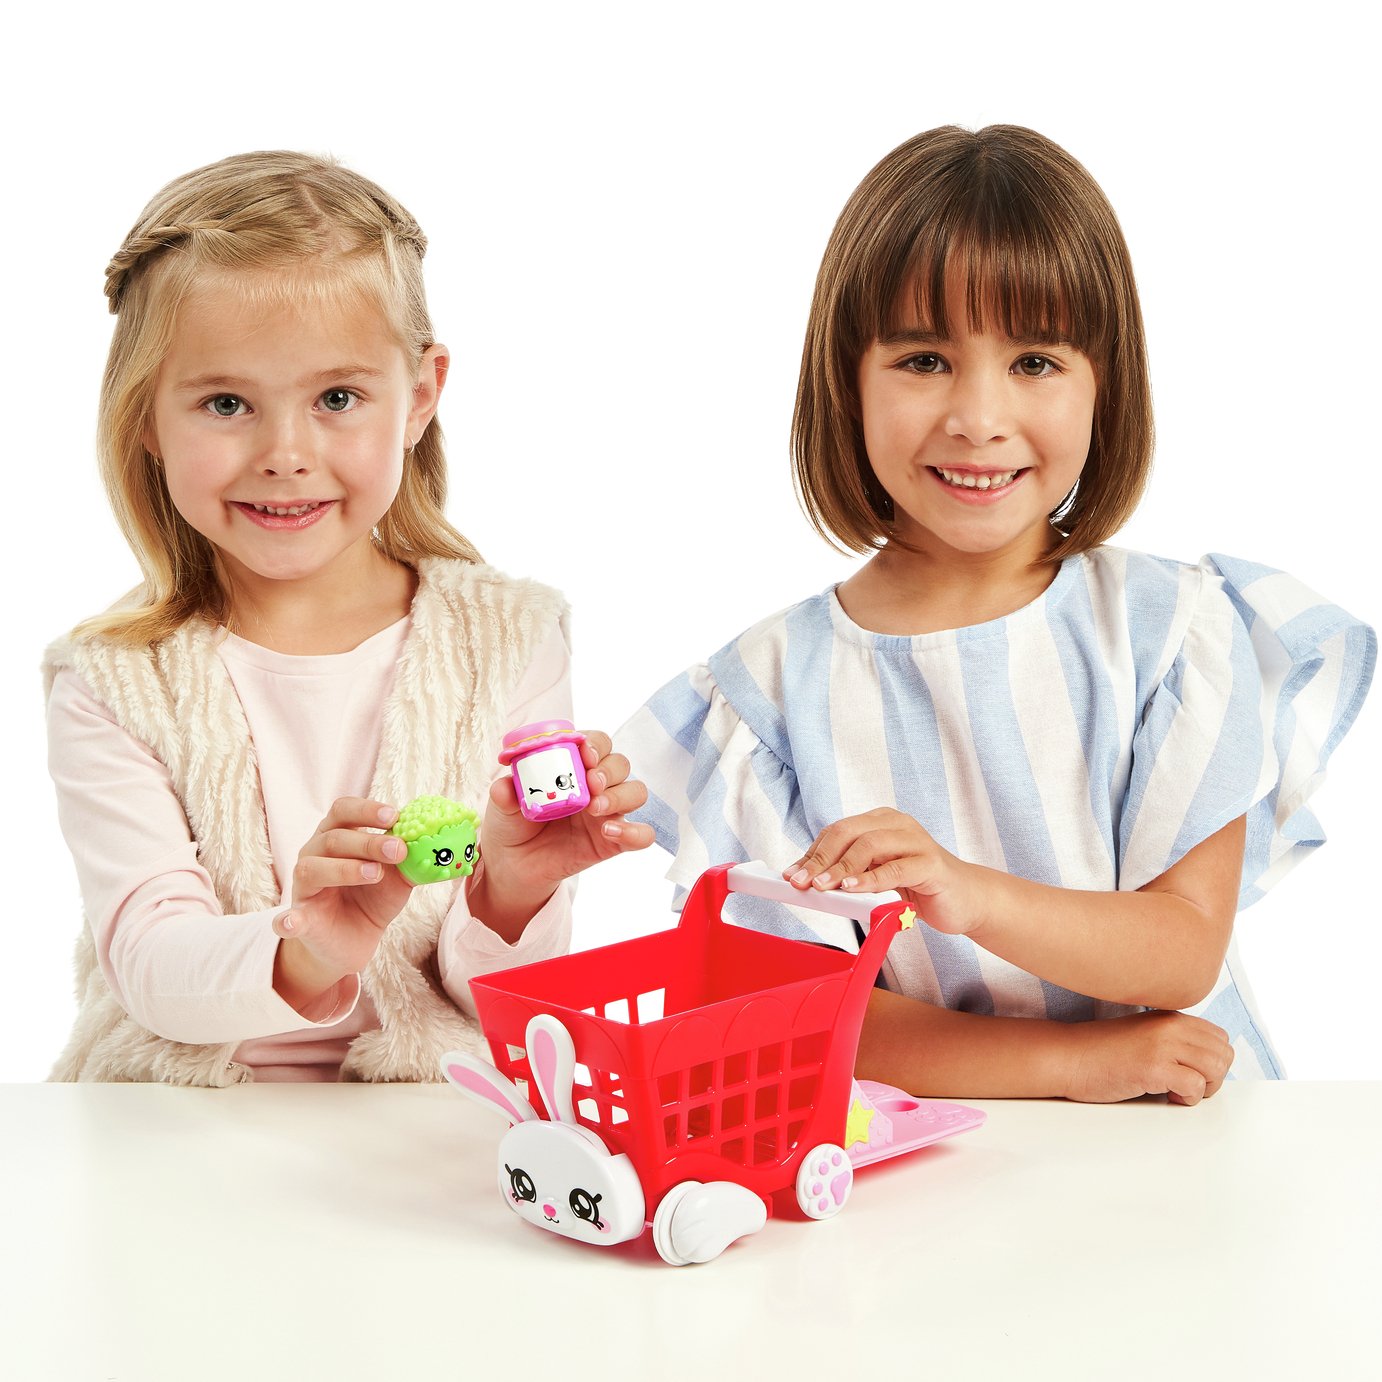 Kindi Kids Rabbit Petkin Shopping Cart and Shopkins Review